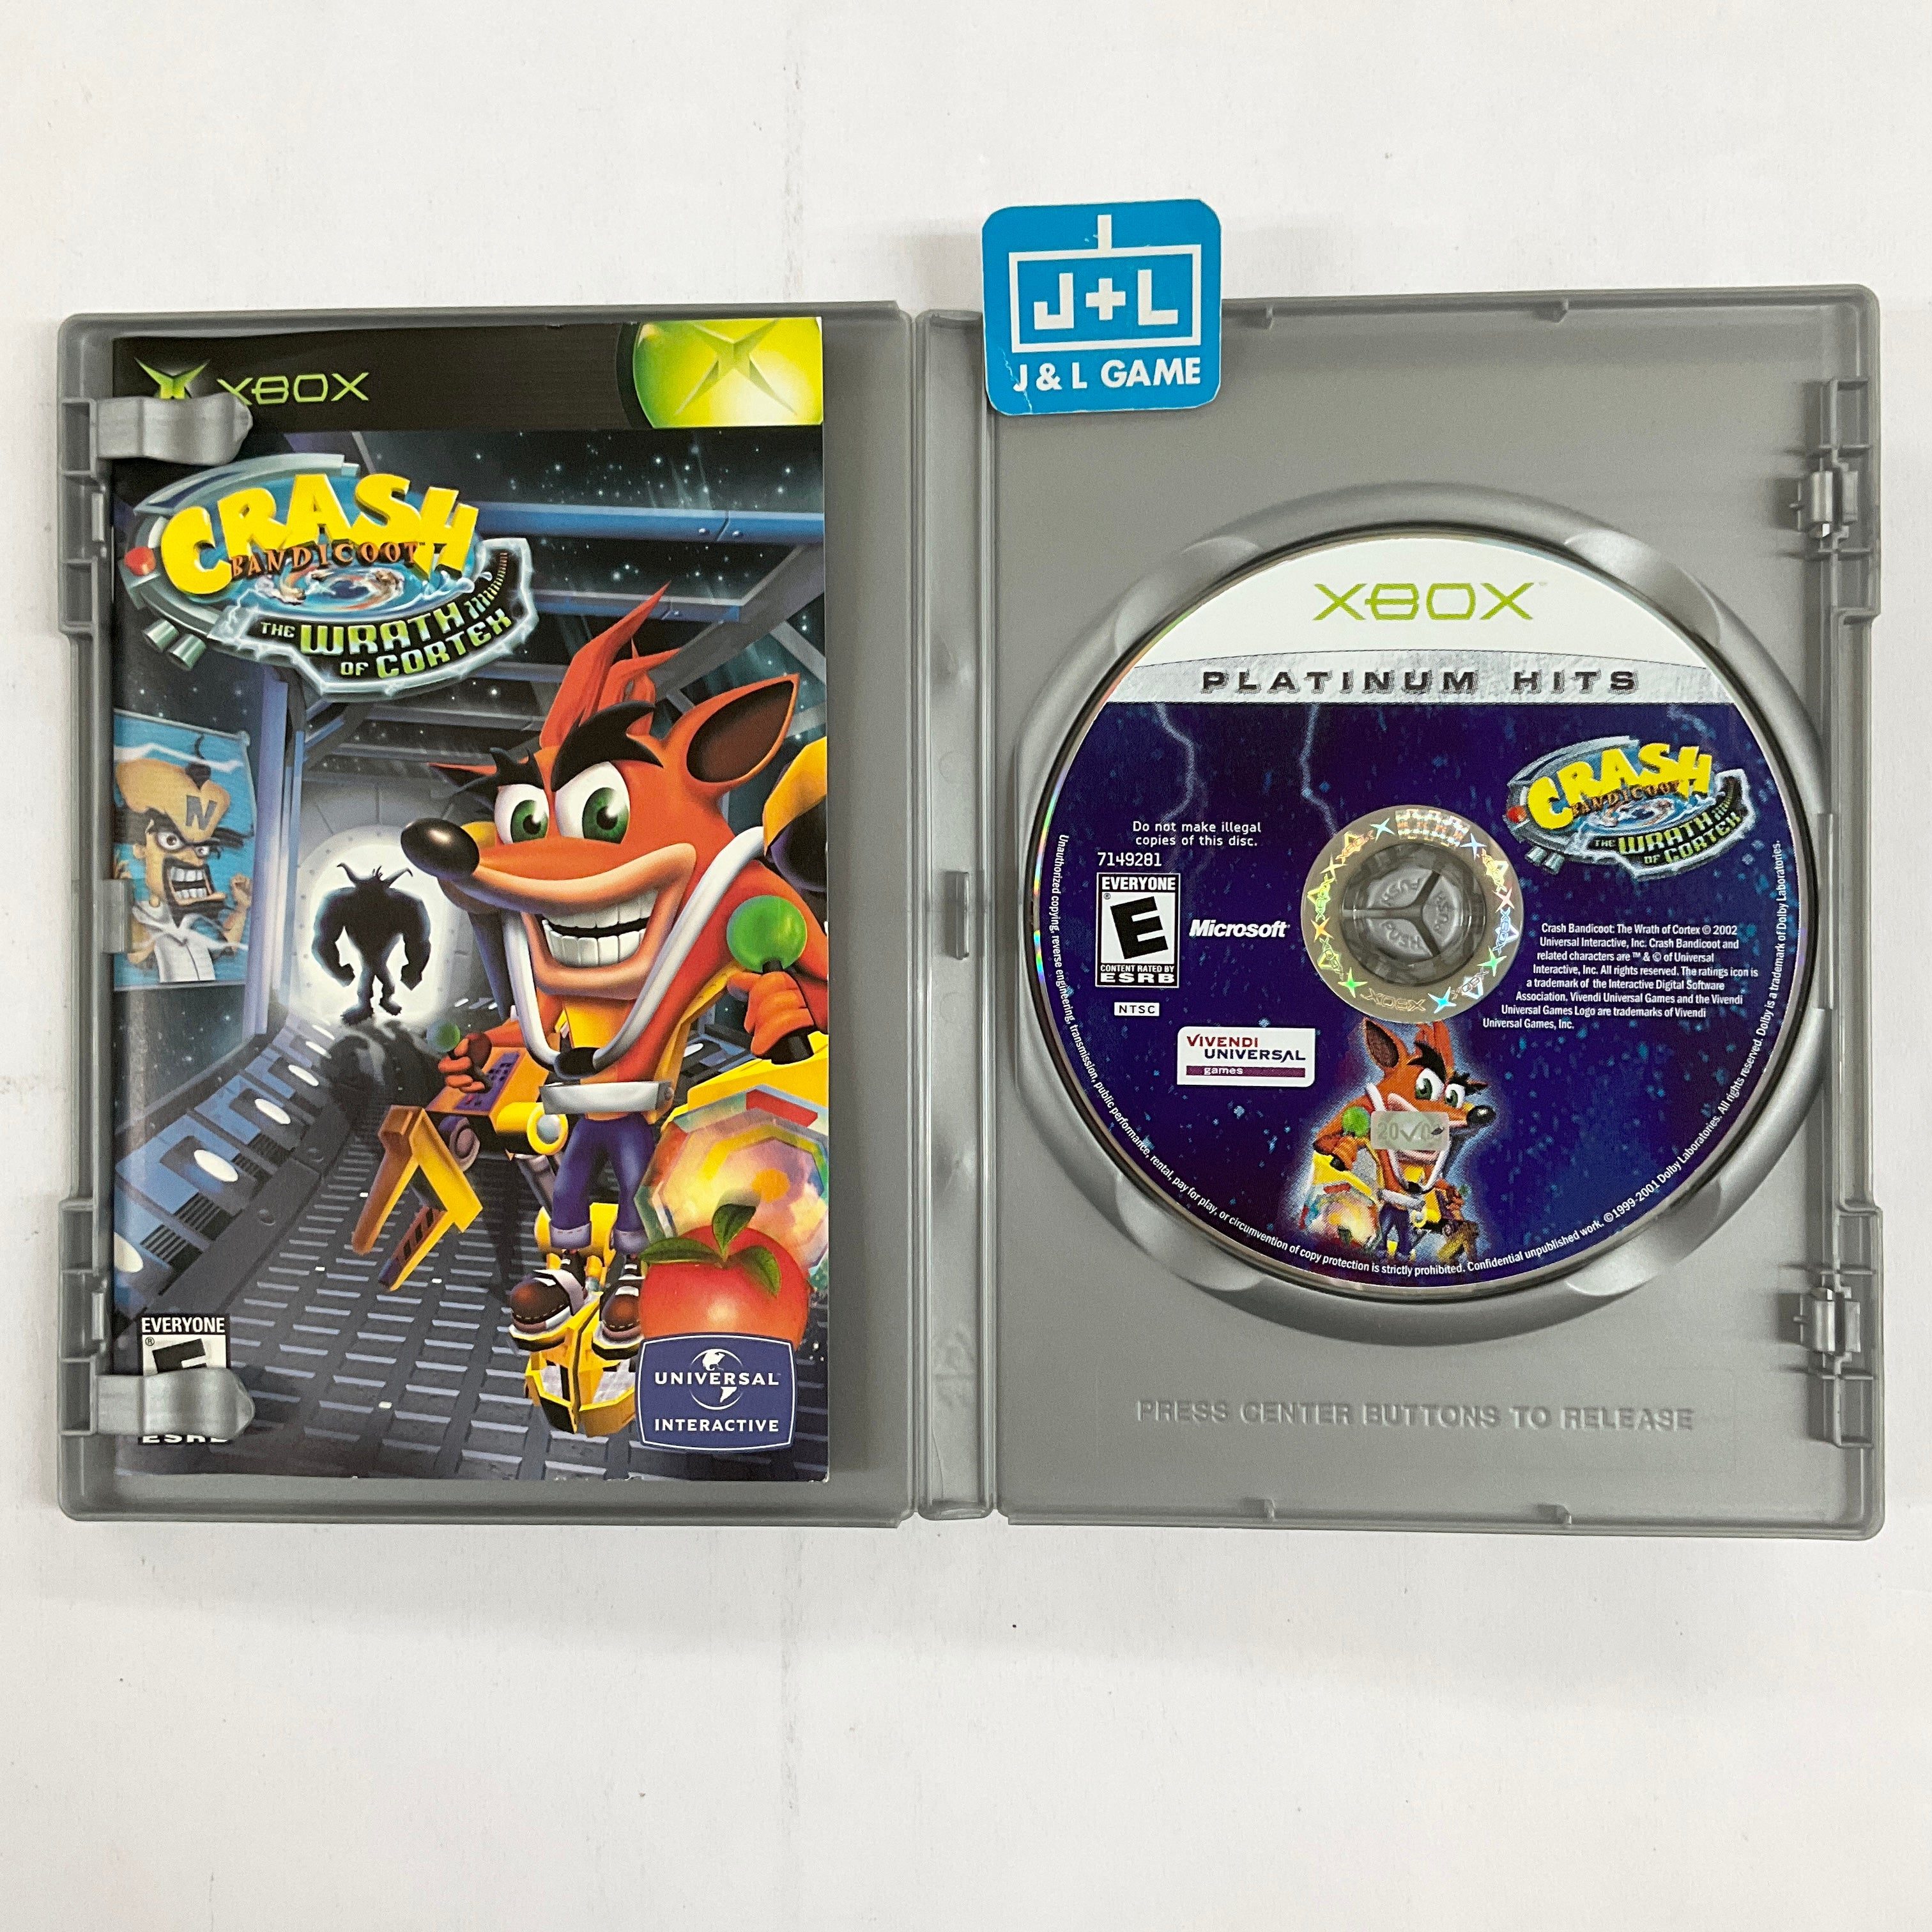 Crash Bandicoot Wrath of Cortex (Platinum Hits) - (XB) XBox [Pre-Owned] Video Games Universal Interactive Studios   